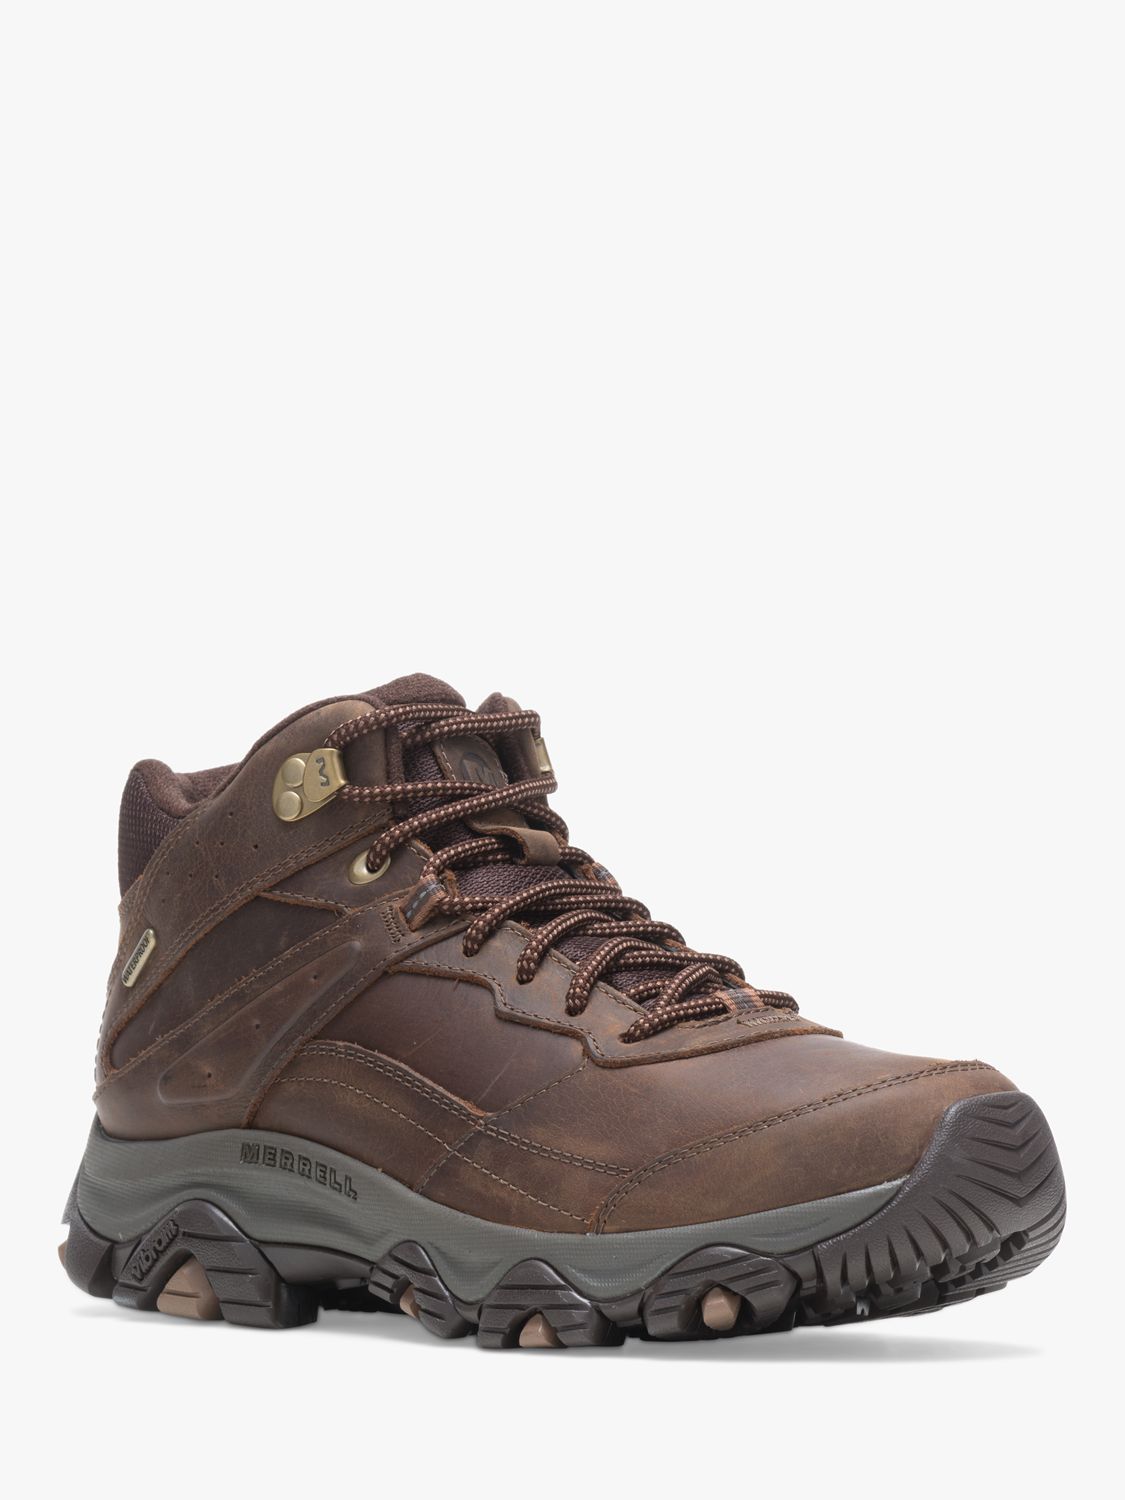 Merrell MOAB Adventure 3 Mid Waterproof Men's Hiking Shoes, Earth, 7